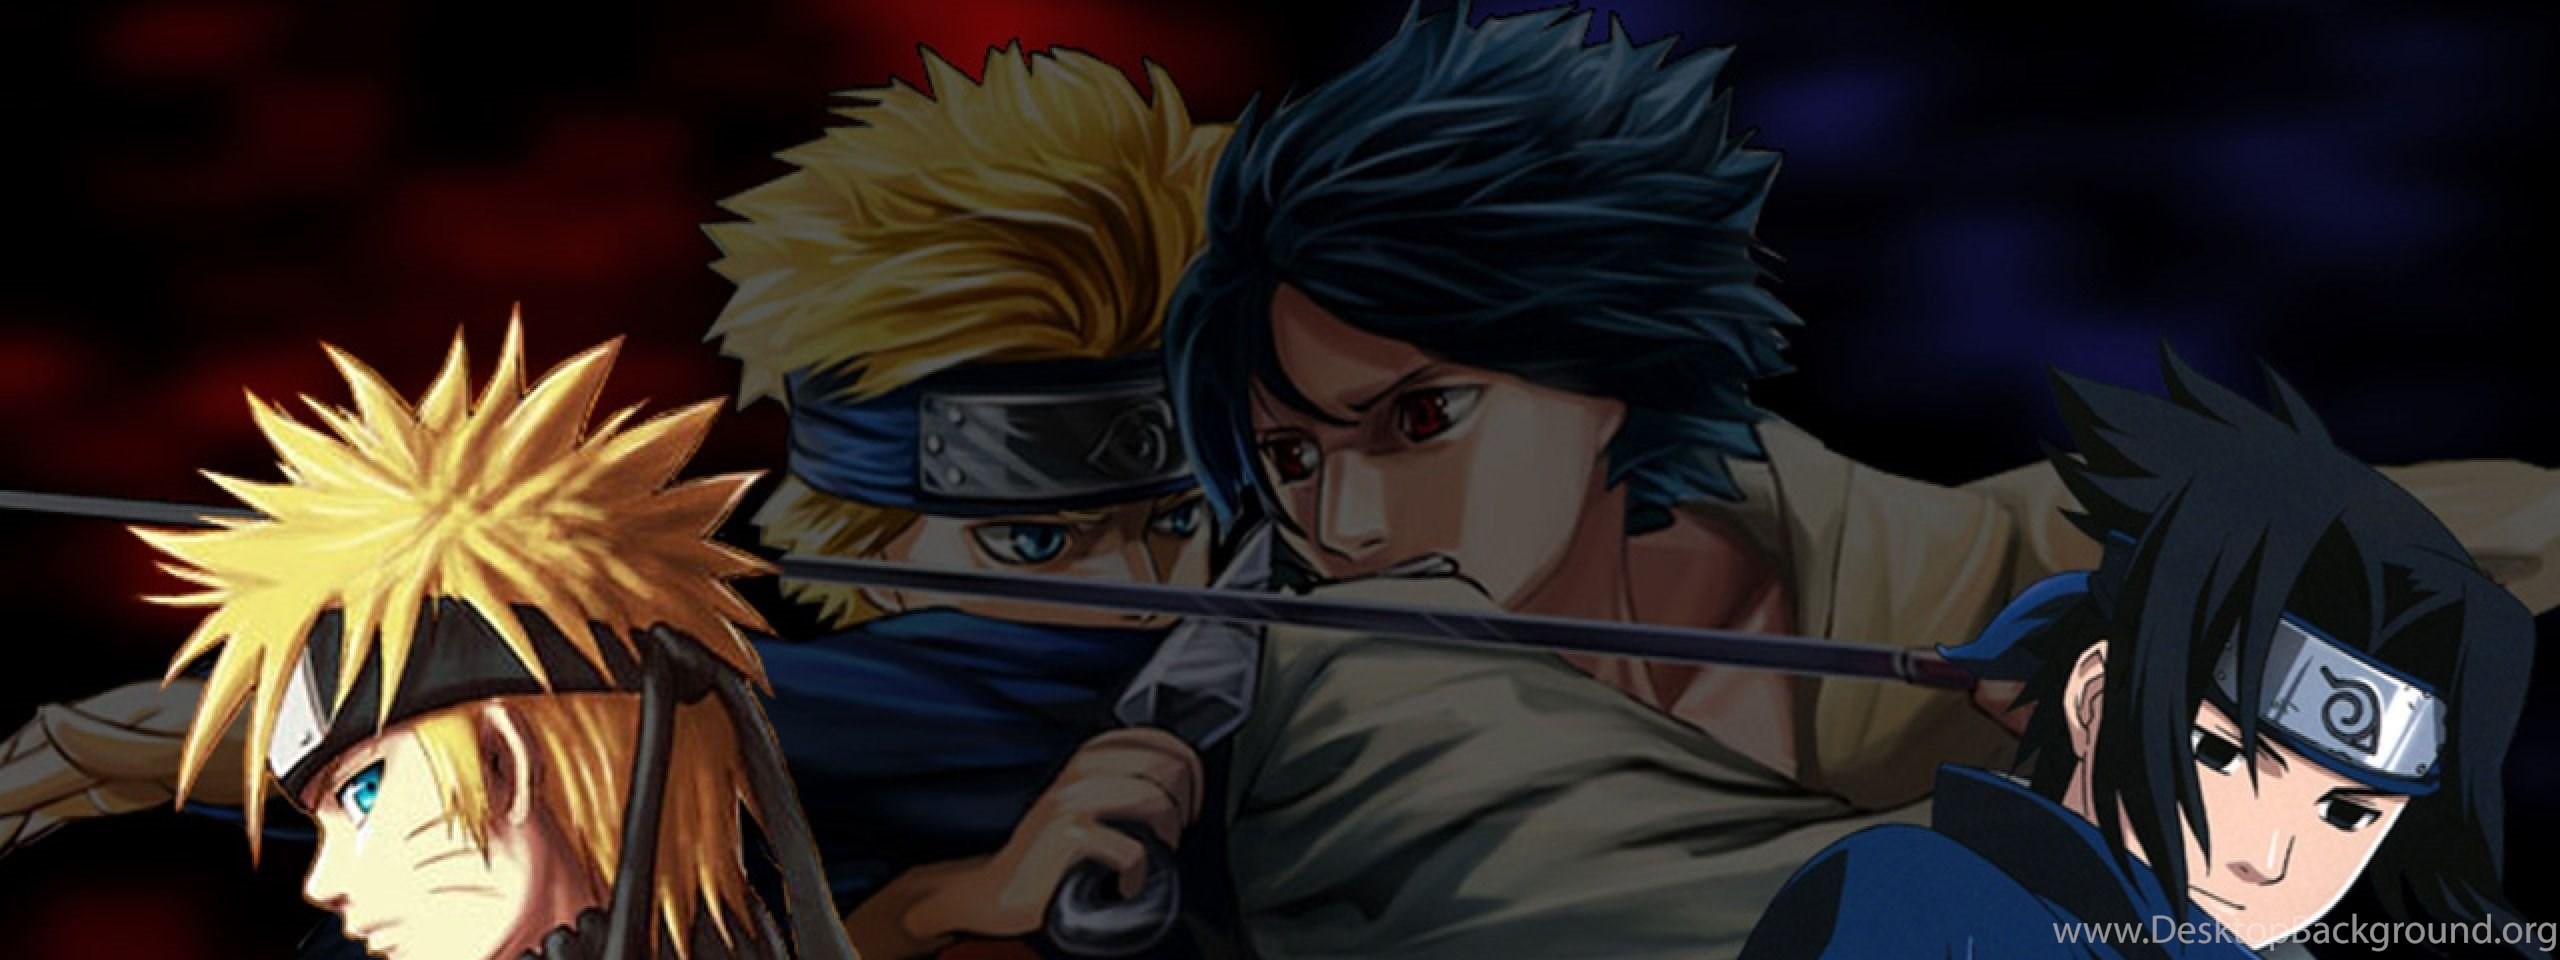 Download Wallpaper 2560x1024 Naruto Vs Sasuke, Guys, Quarrel. Desktop Background